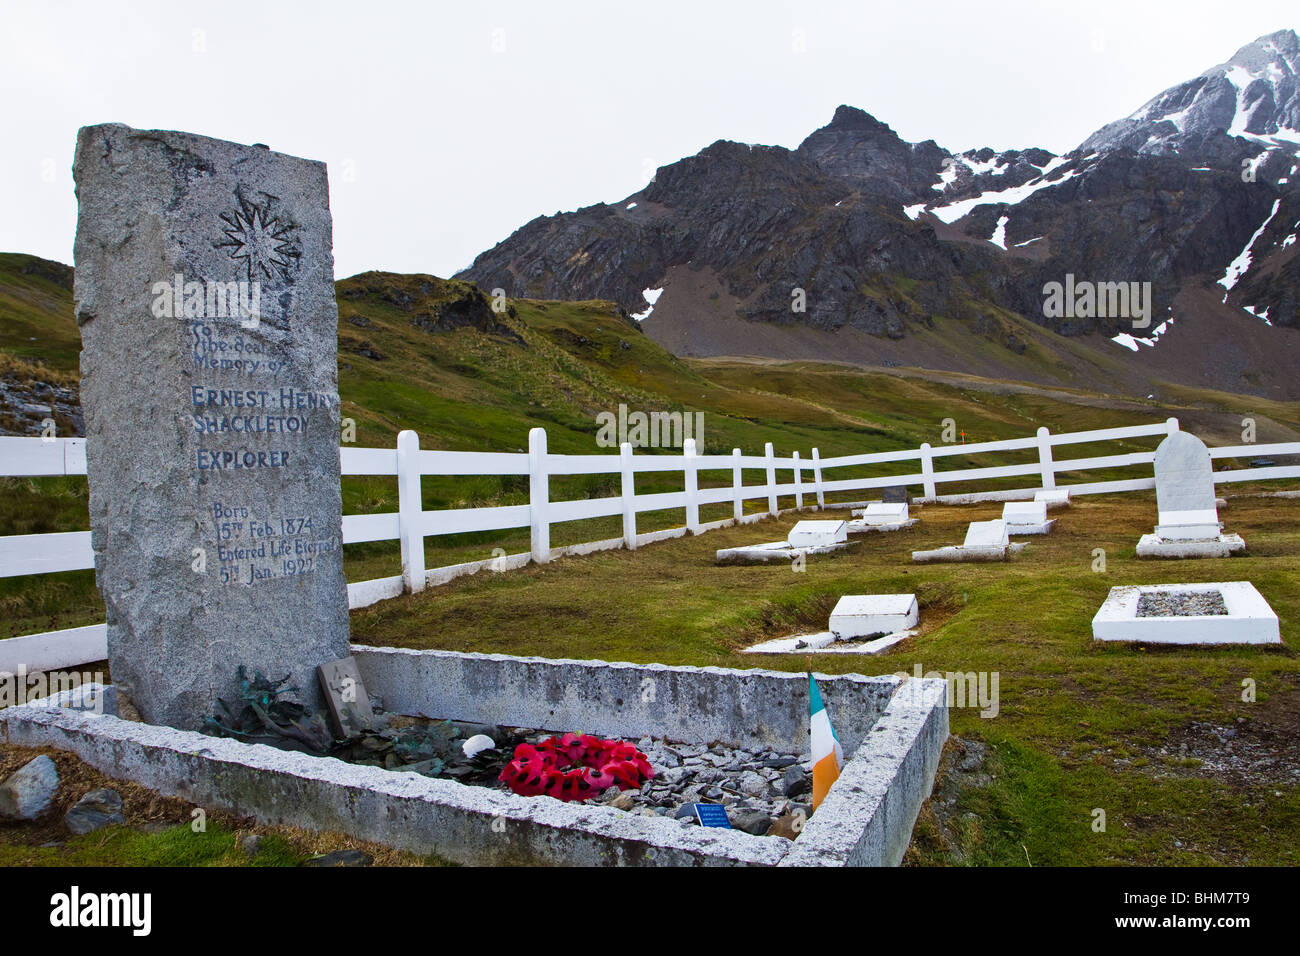 The grave of explorer Sir Ernest Shackleton at the Grytviken whaler's cemetery, South Georgia Island. Stock Photo